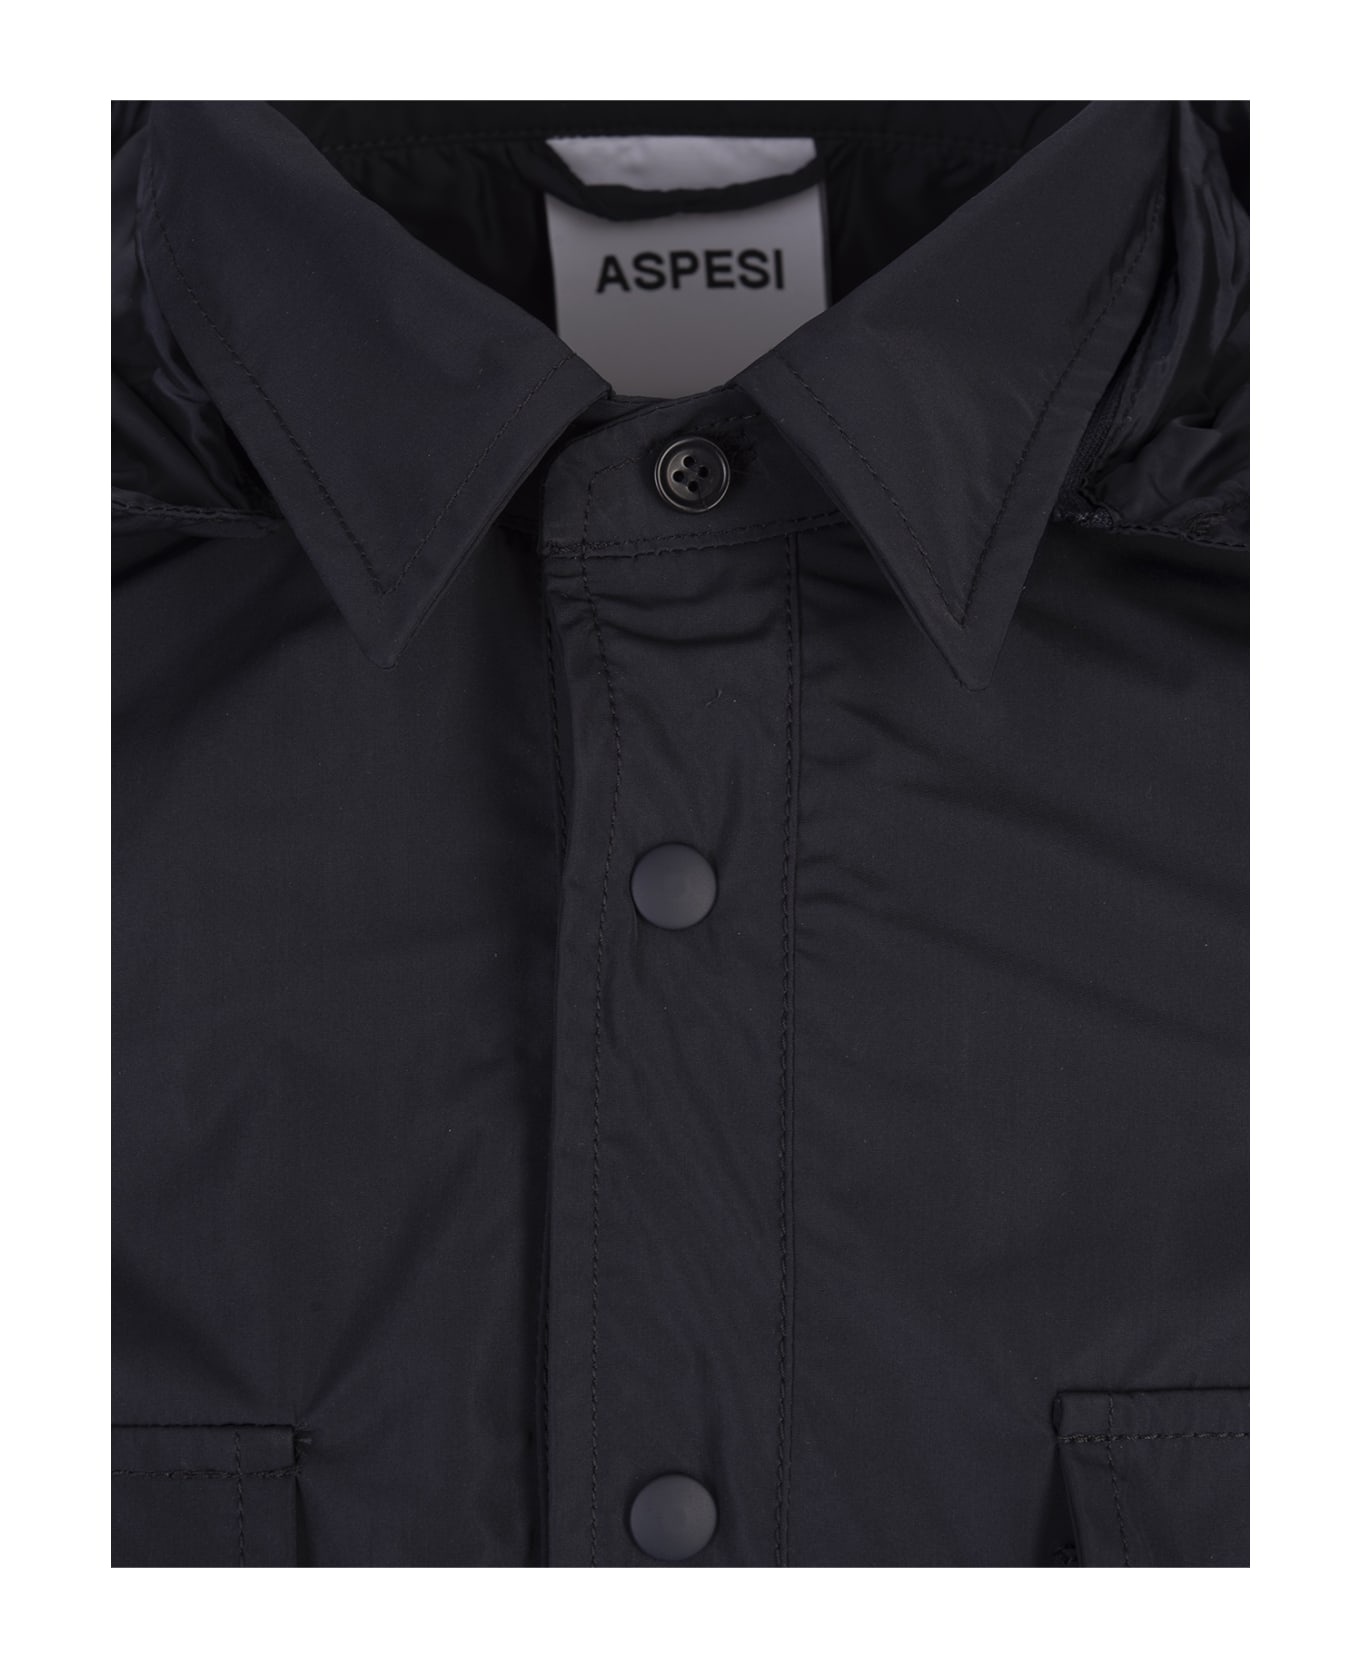 Aspesi Black Hooded Shirt Jacket - Black レインコート